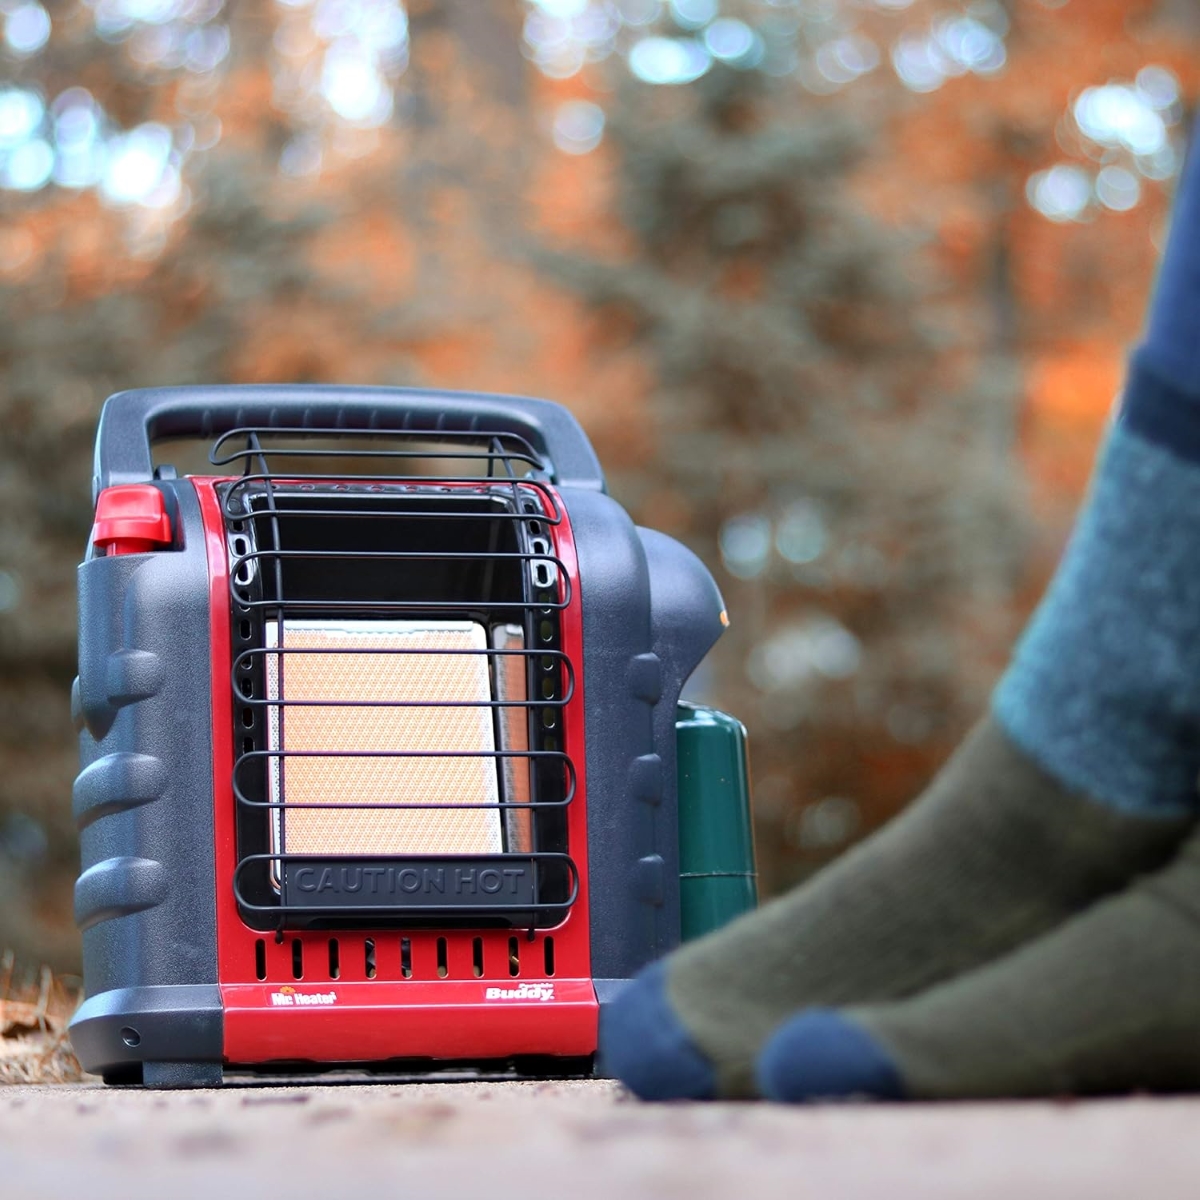 Radiant heater next to feet